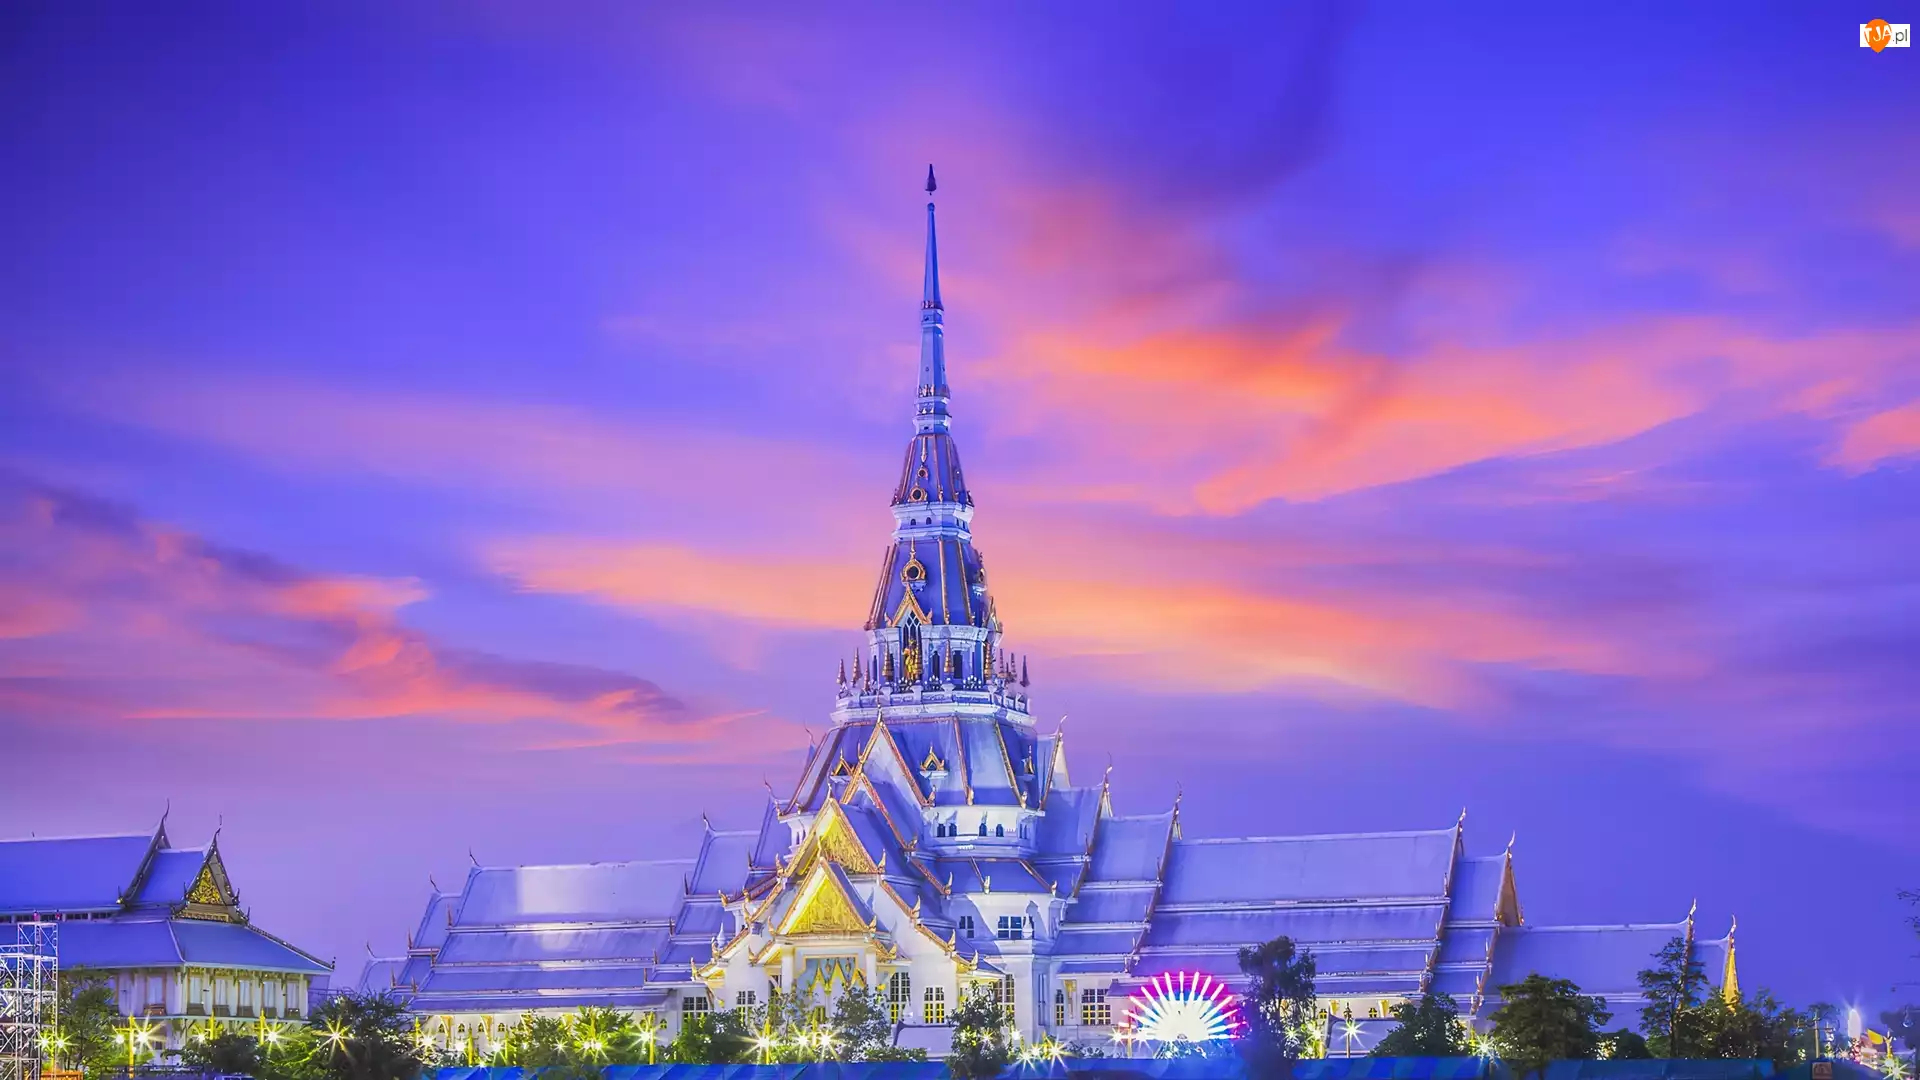 Pałac, Tajlandia